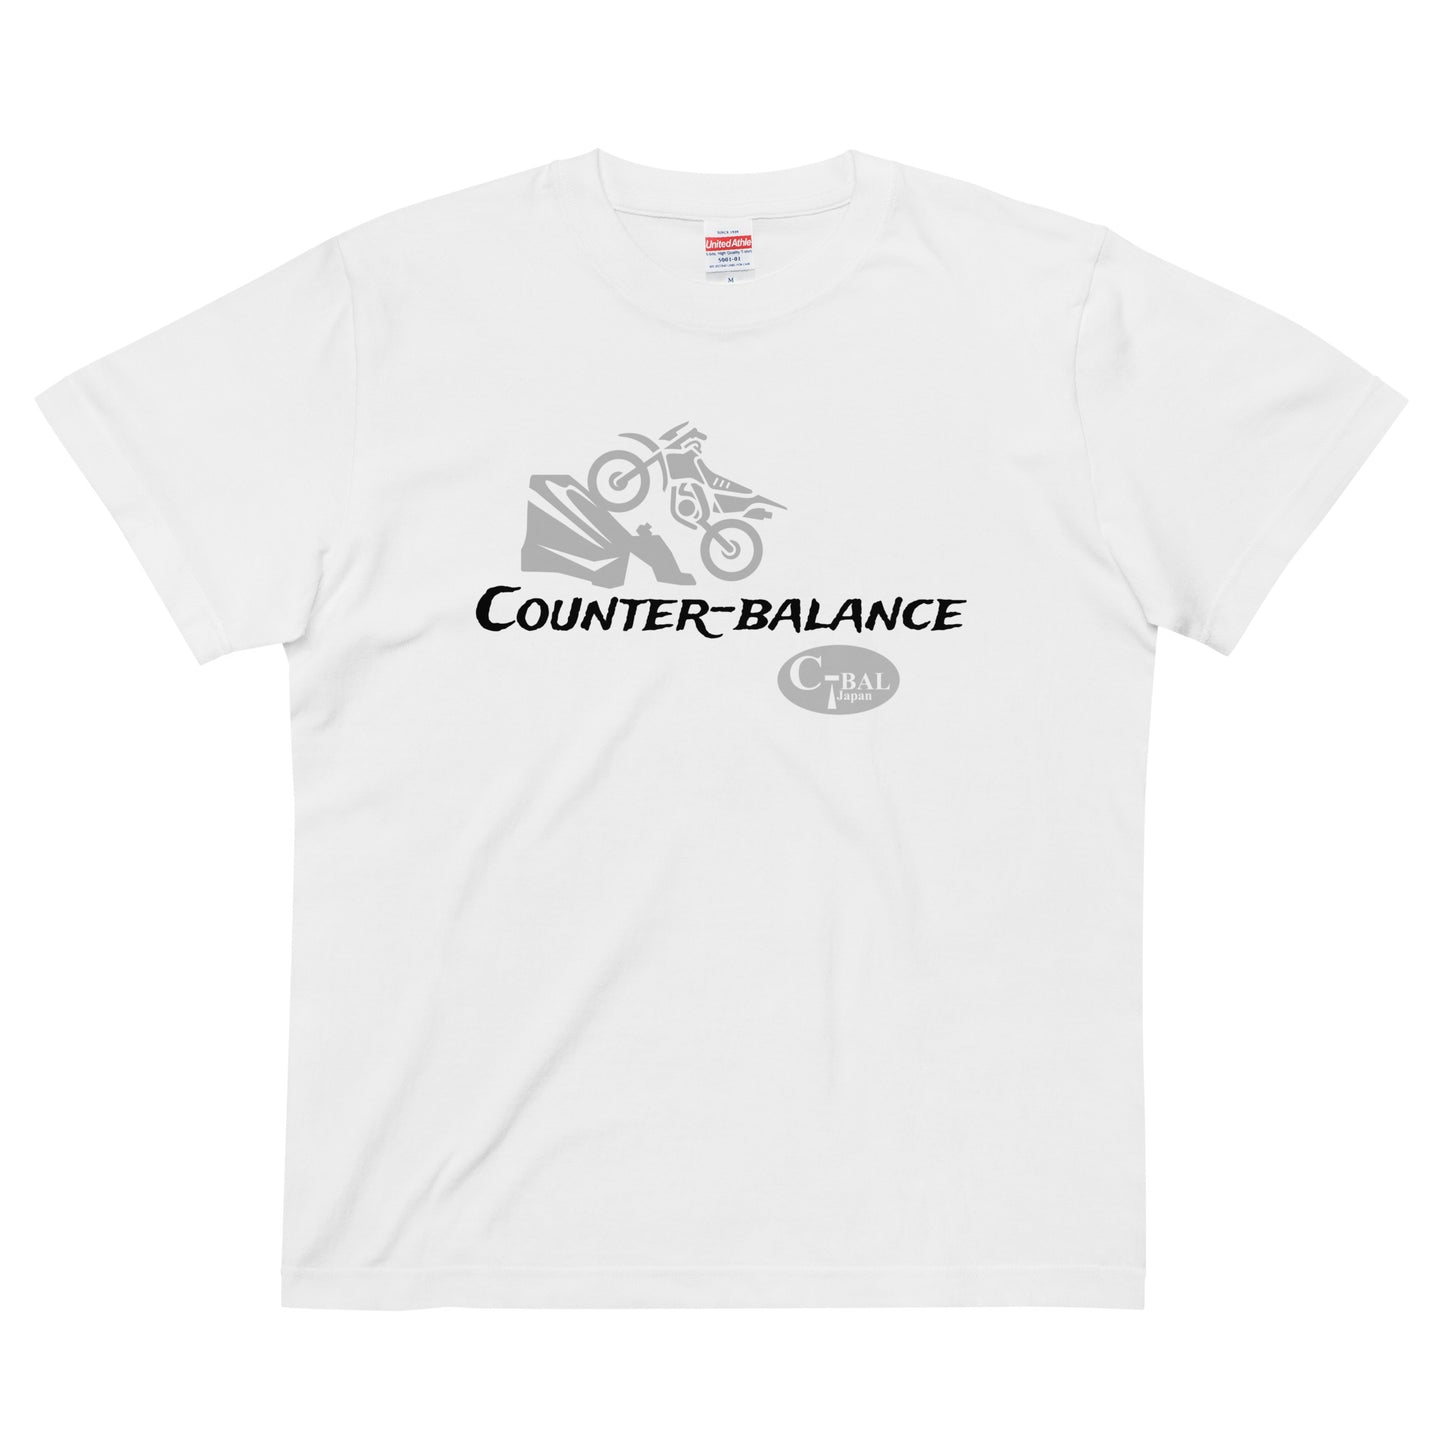 E008 - High quality cotton T-shirt (Offroad MC: White/Silver)